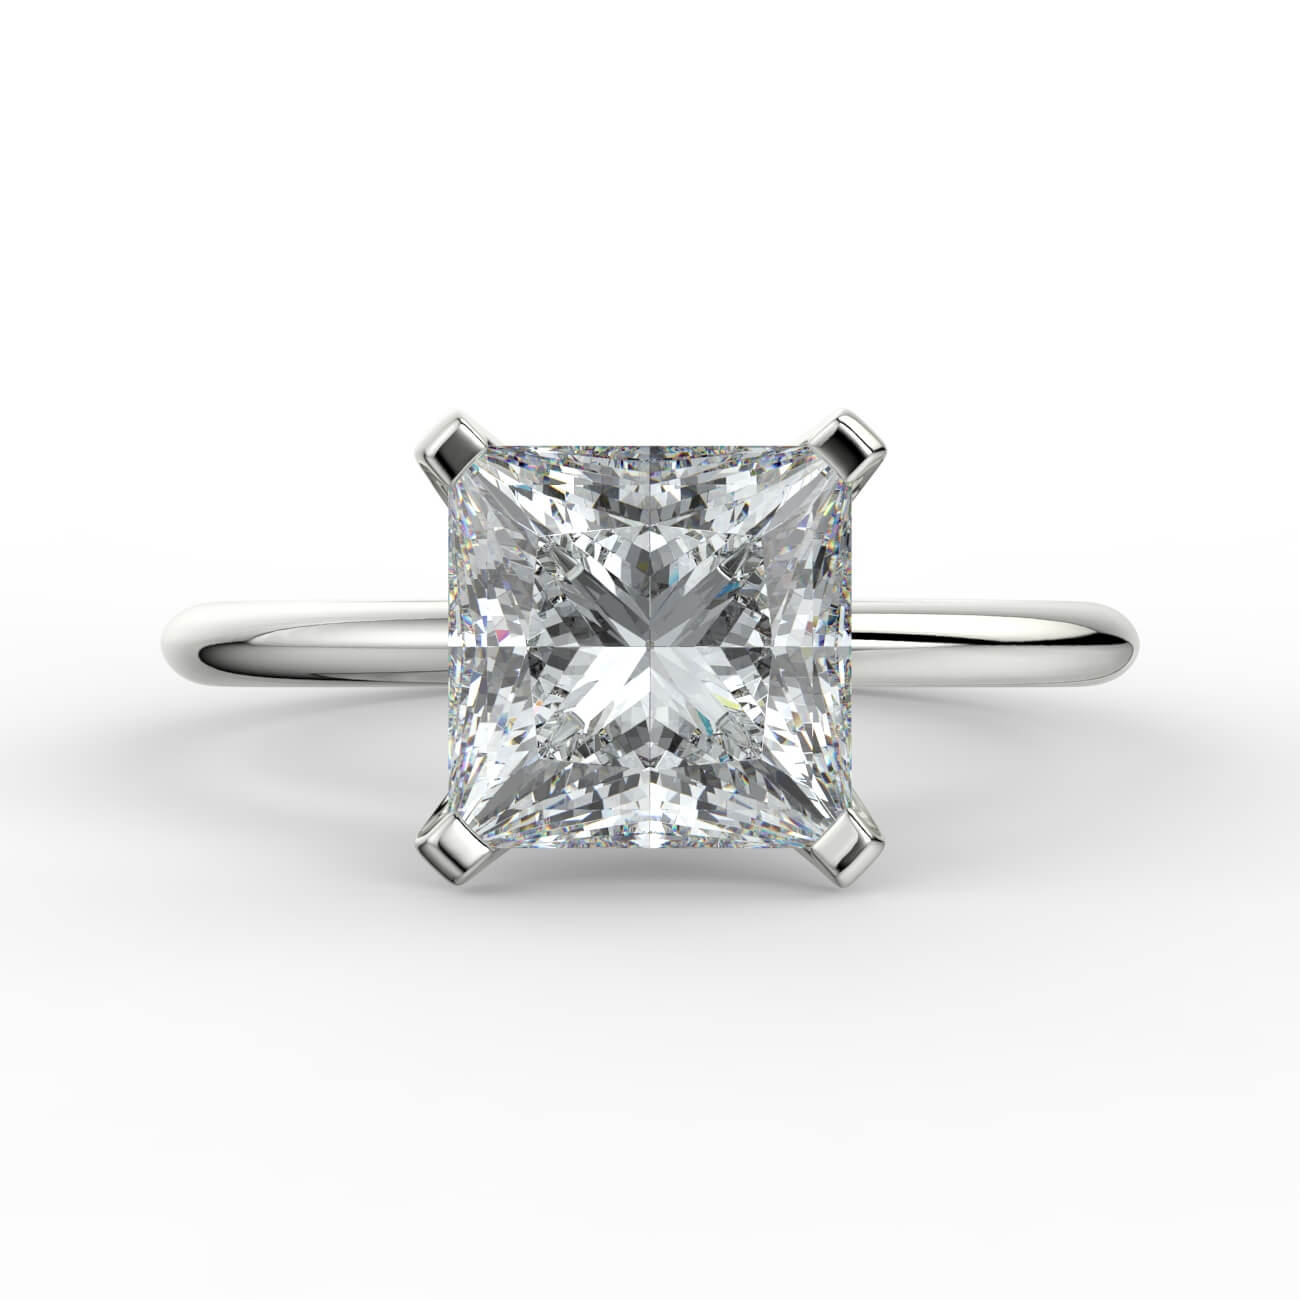 Knife-edge solitaire princess cut diamond engagement ring in platinum – Australian Diamond Network